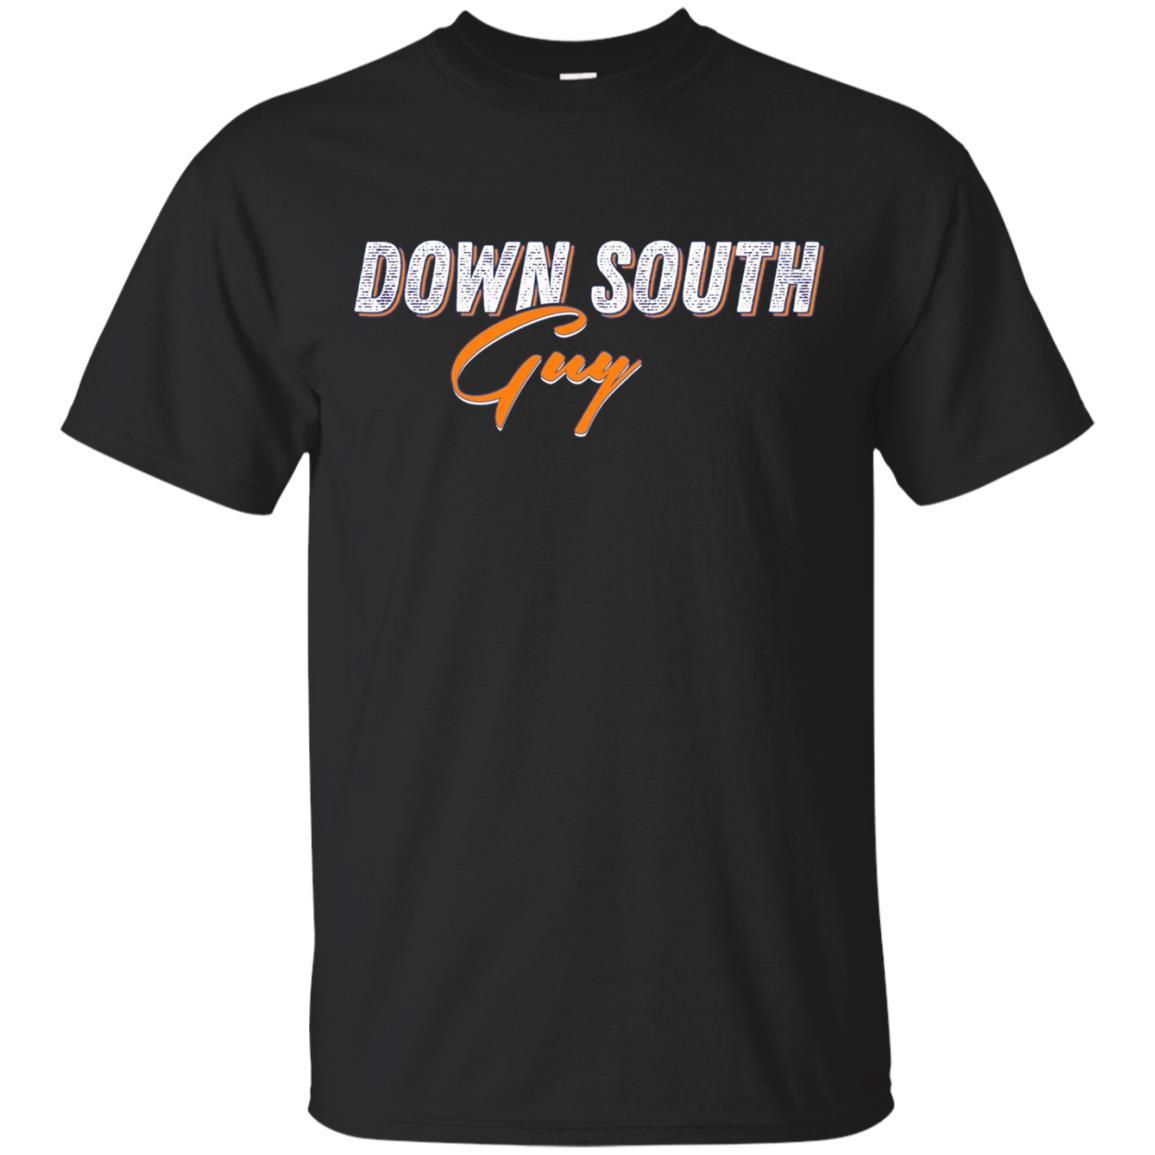 Down South Guy T Shirt